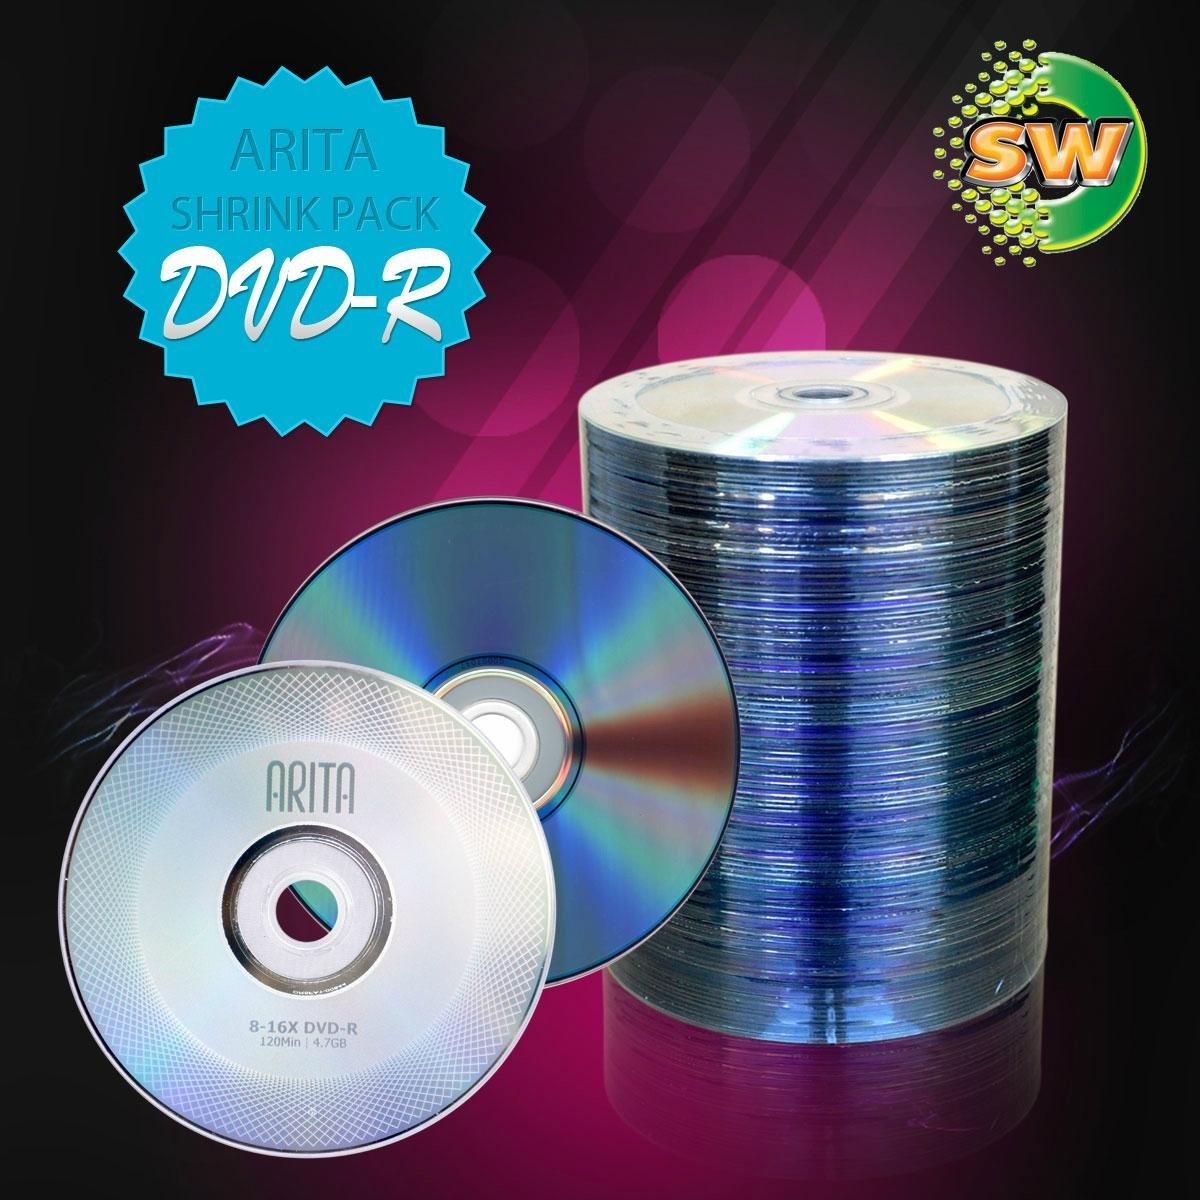 Stocks) DVD-R RiDATA & ARITA 4.7GB 16X/120min (100 Shrink Pack) - TAIWAN -  DBRA01 - RiTEK (Taiwan Manufacturer) - Optical & Magnetic Drive